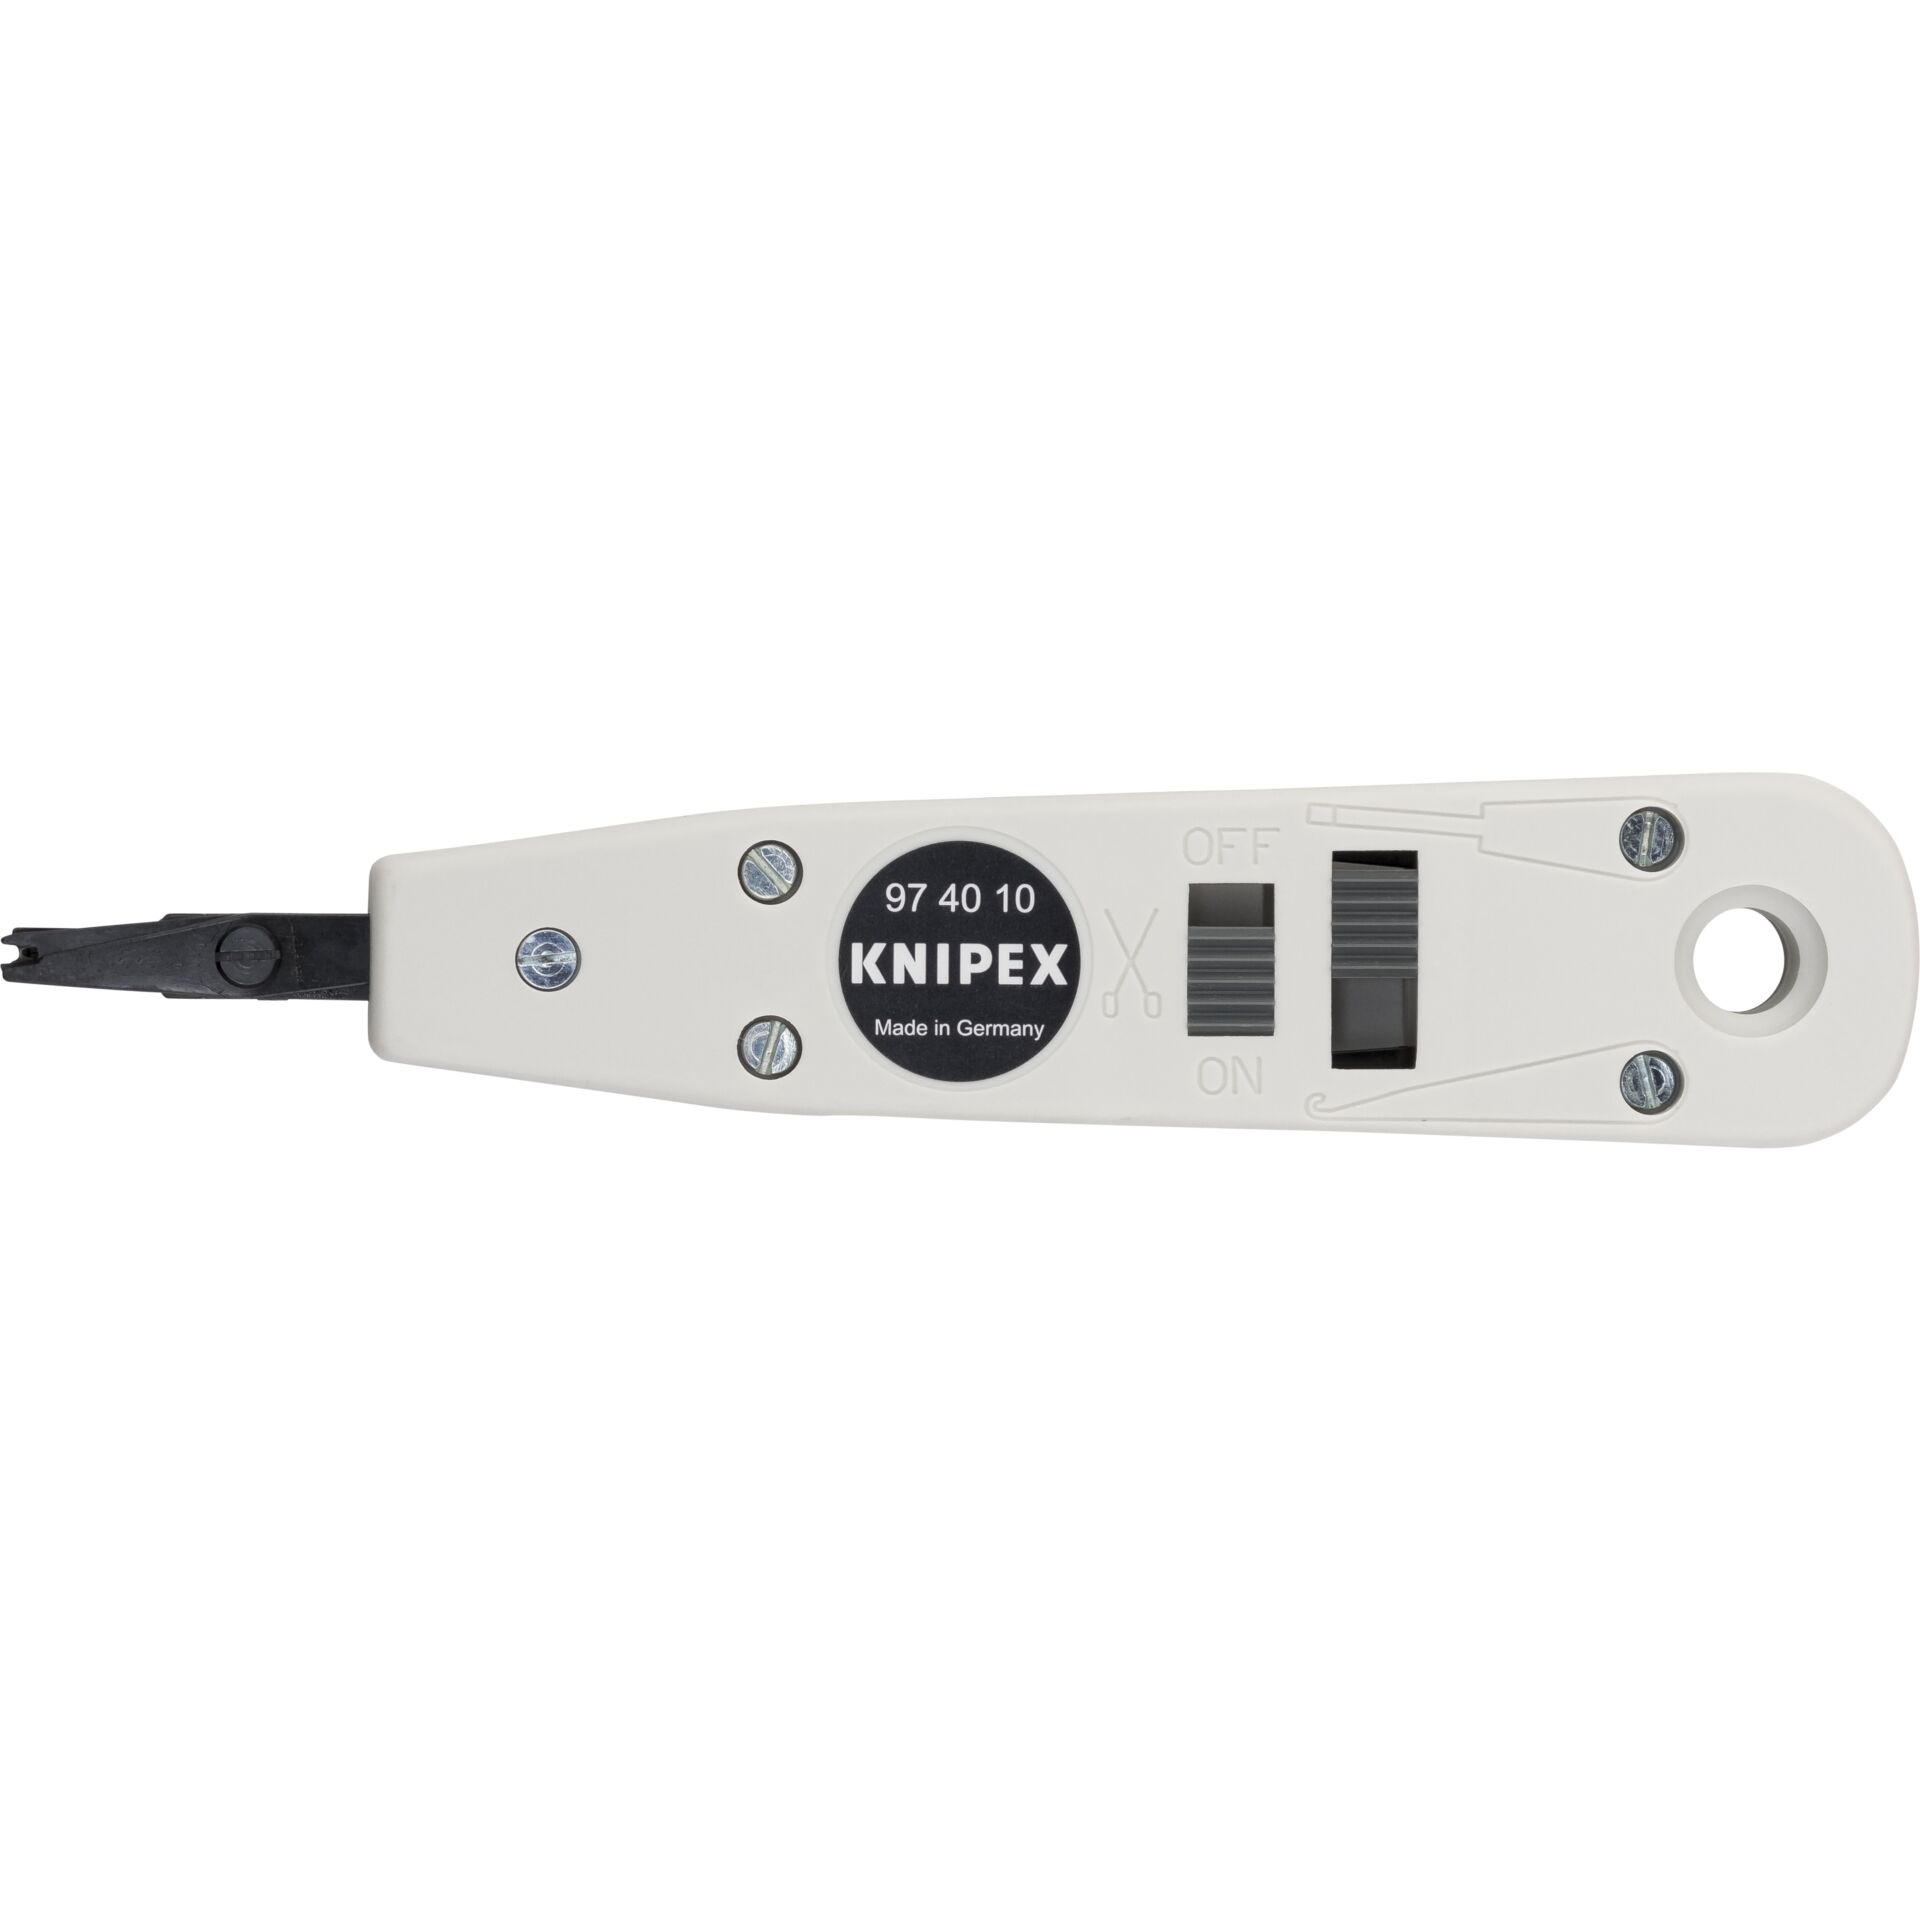 Knipex 97 40 10 Kabel-Crimper Einsatzgerät Aluminium